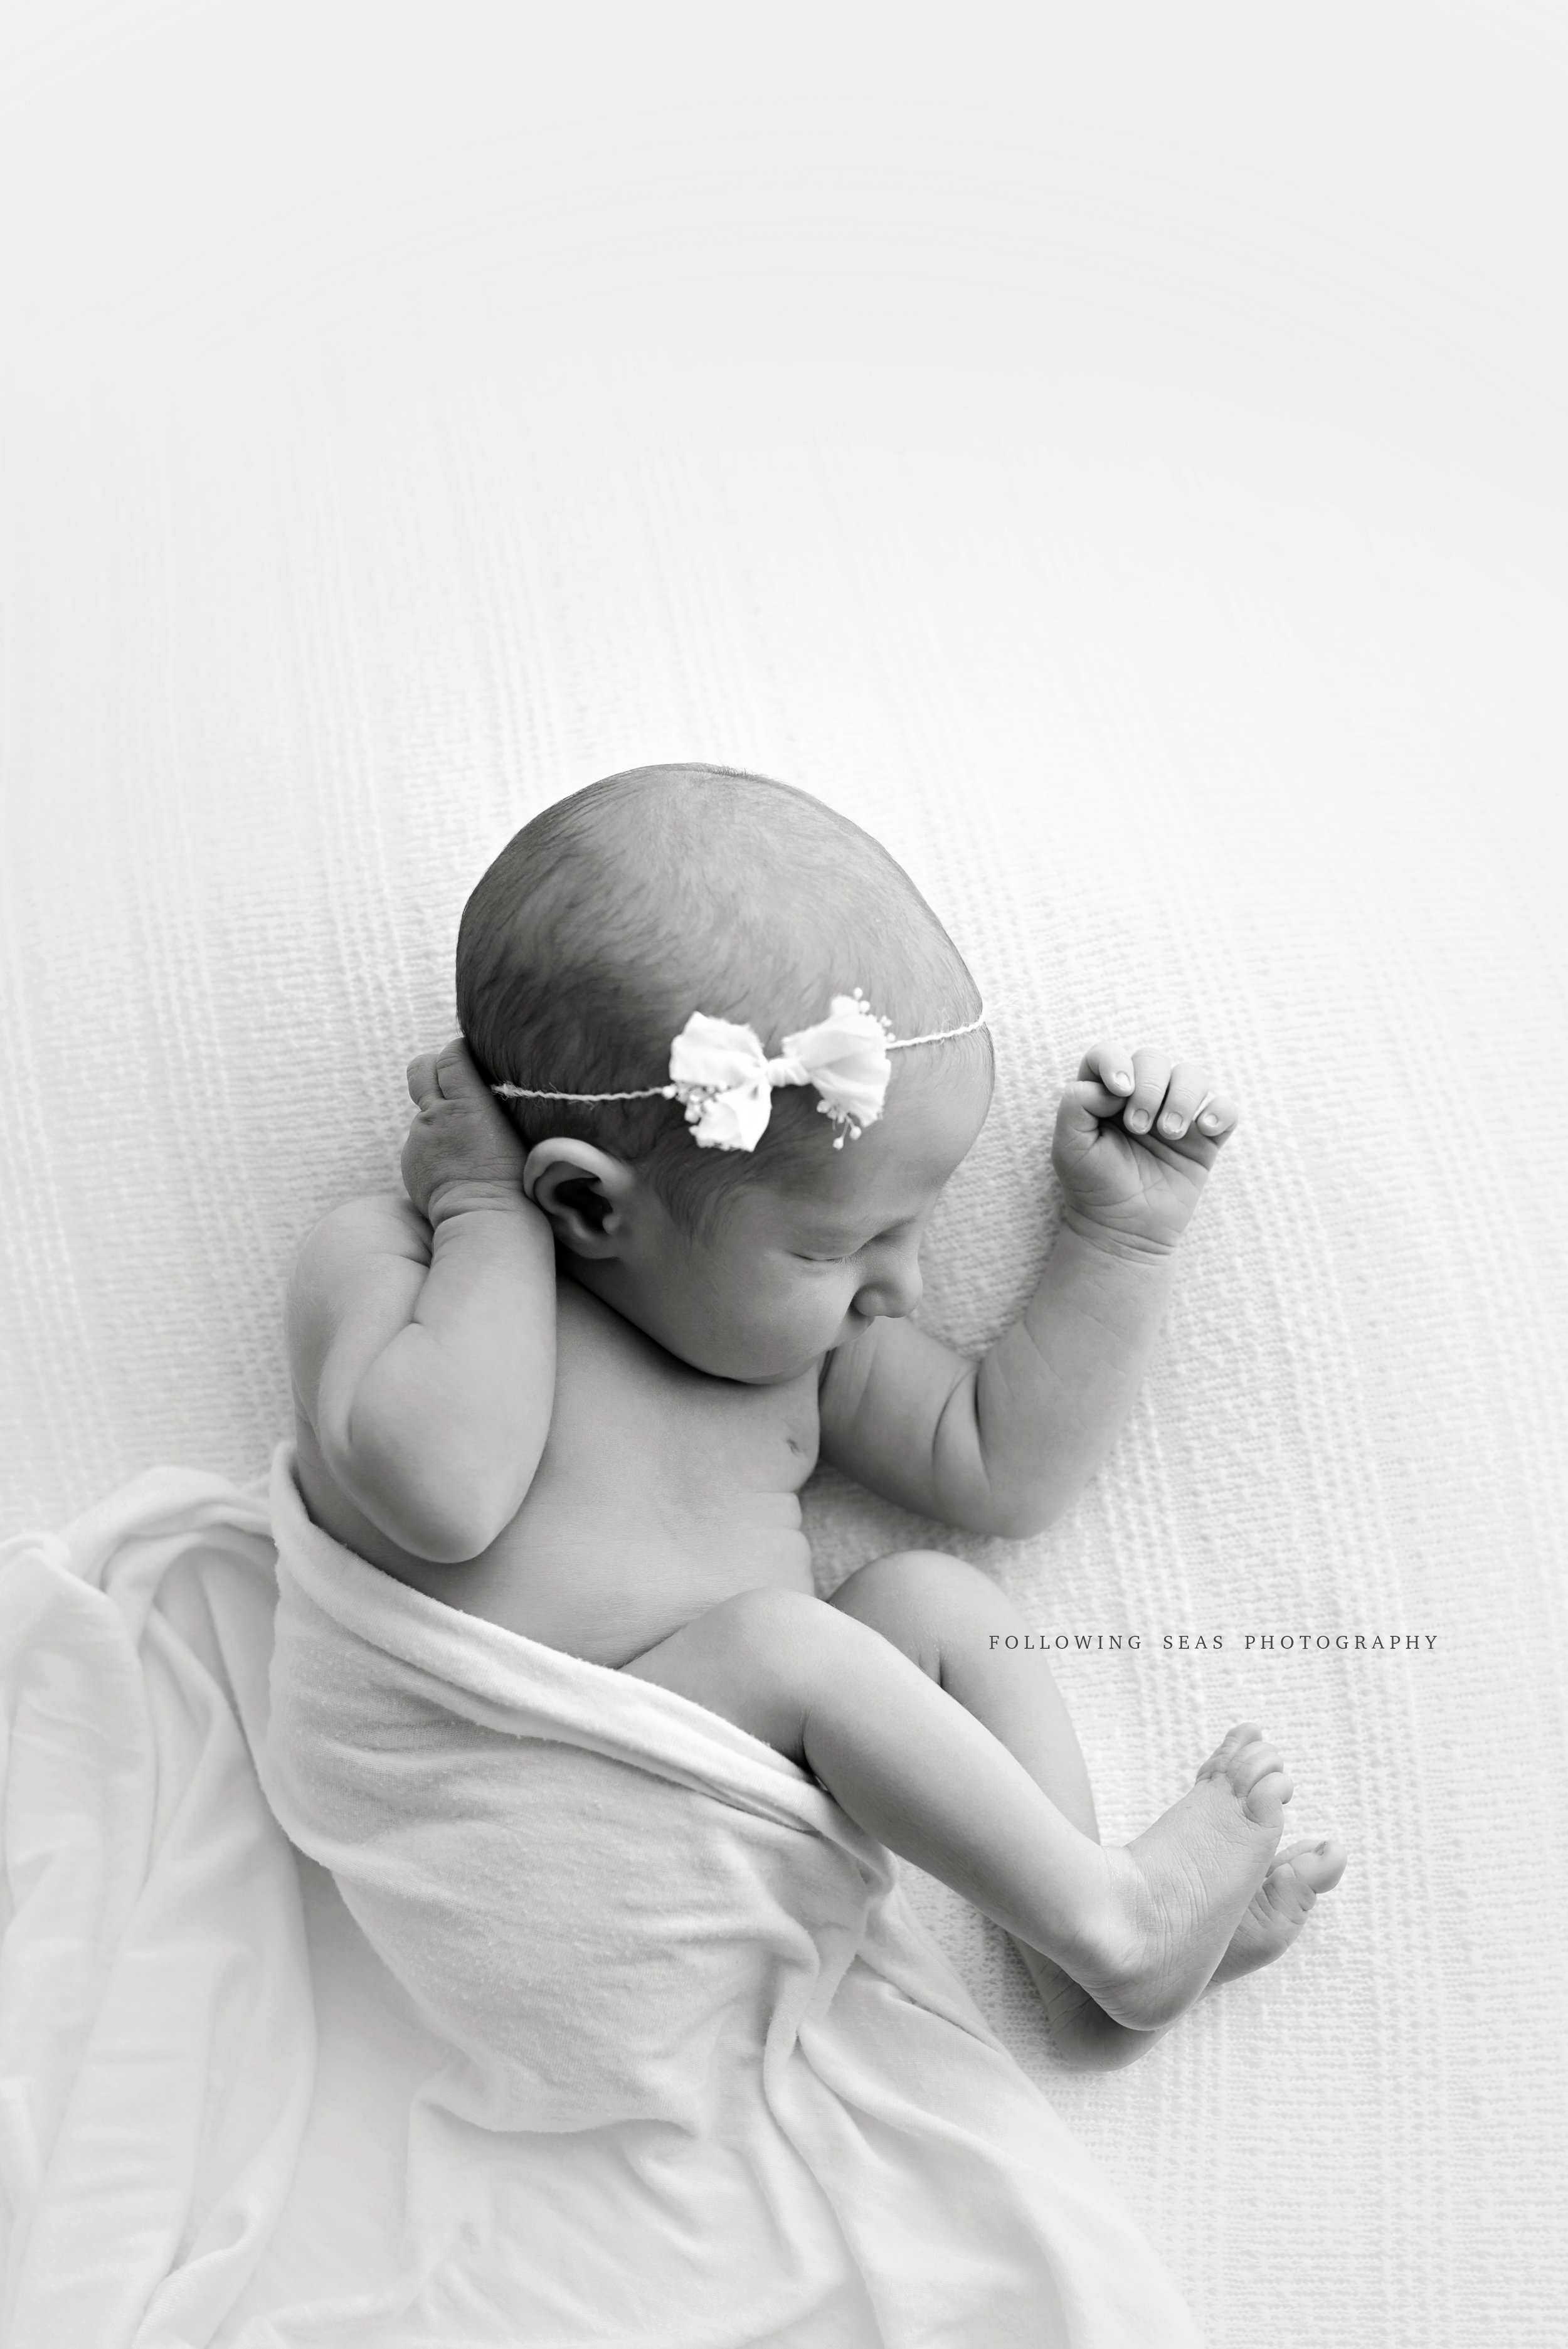 Charleston-Newborn-Photographer-Following-Seas-Photography-6961BW.jpg